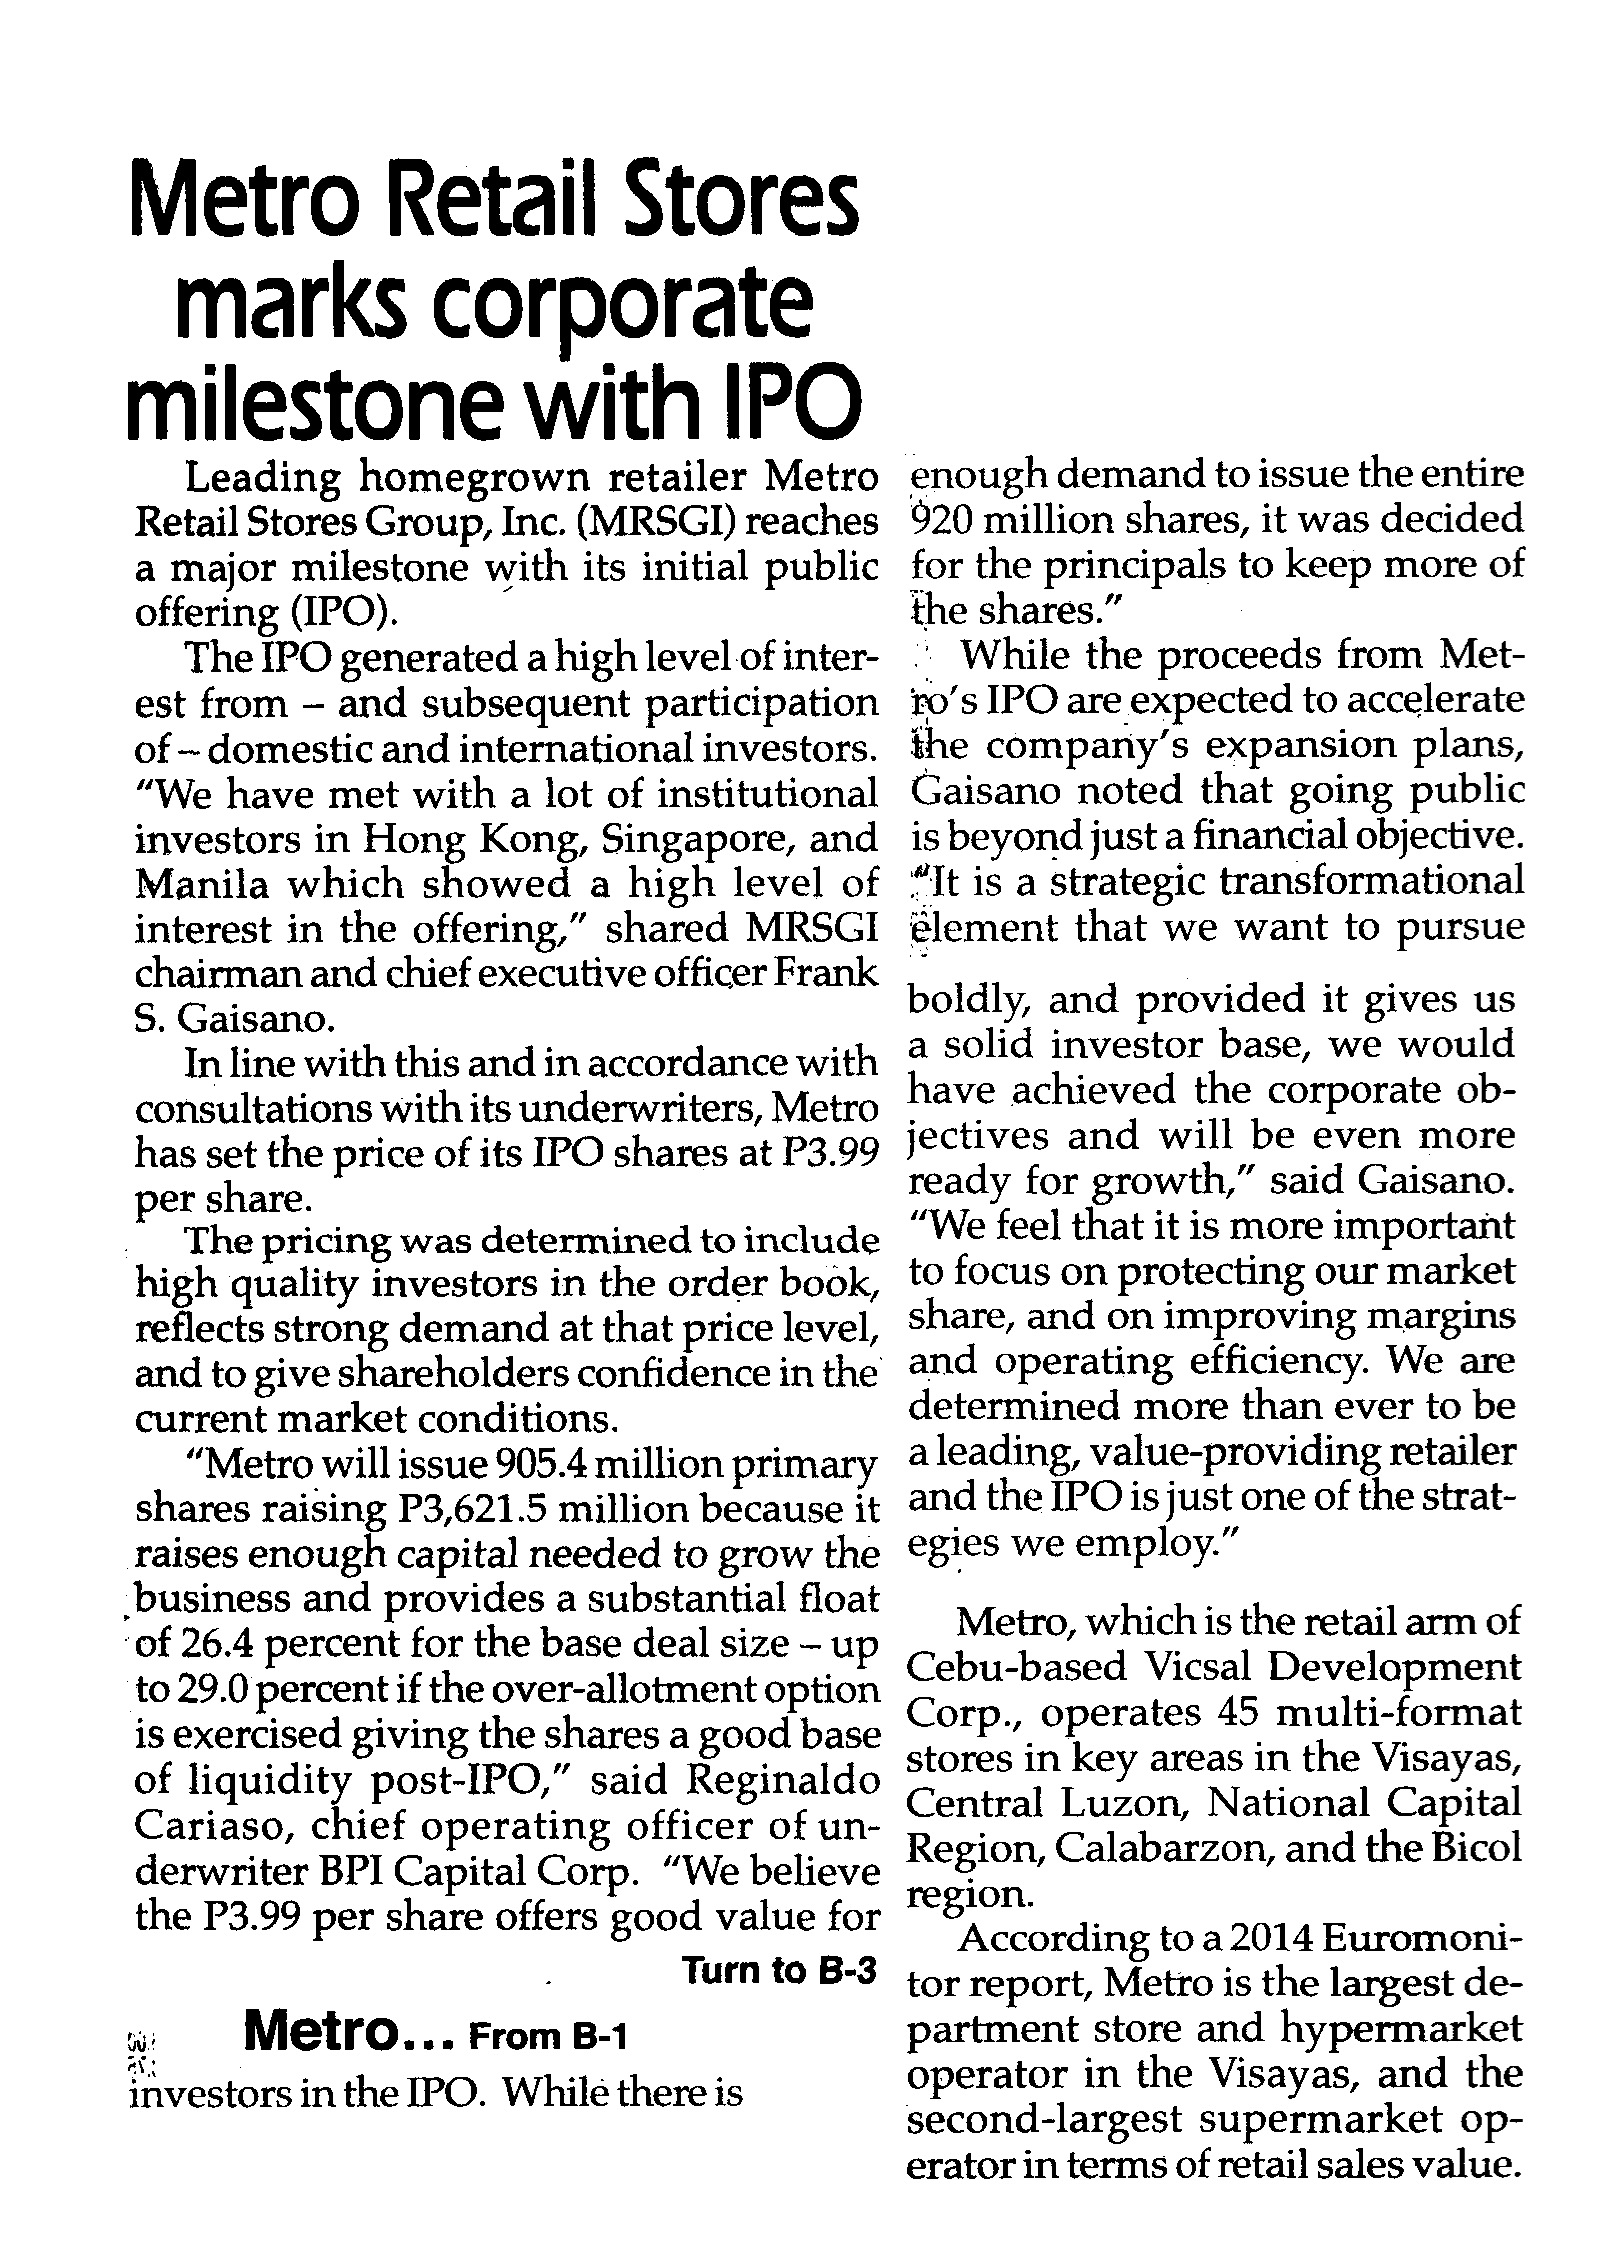 Metro Retail Stores marks corporate milestone with IPO | The Philippine ...